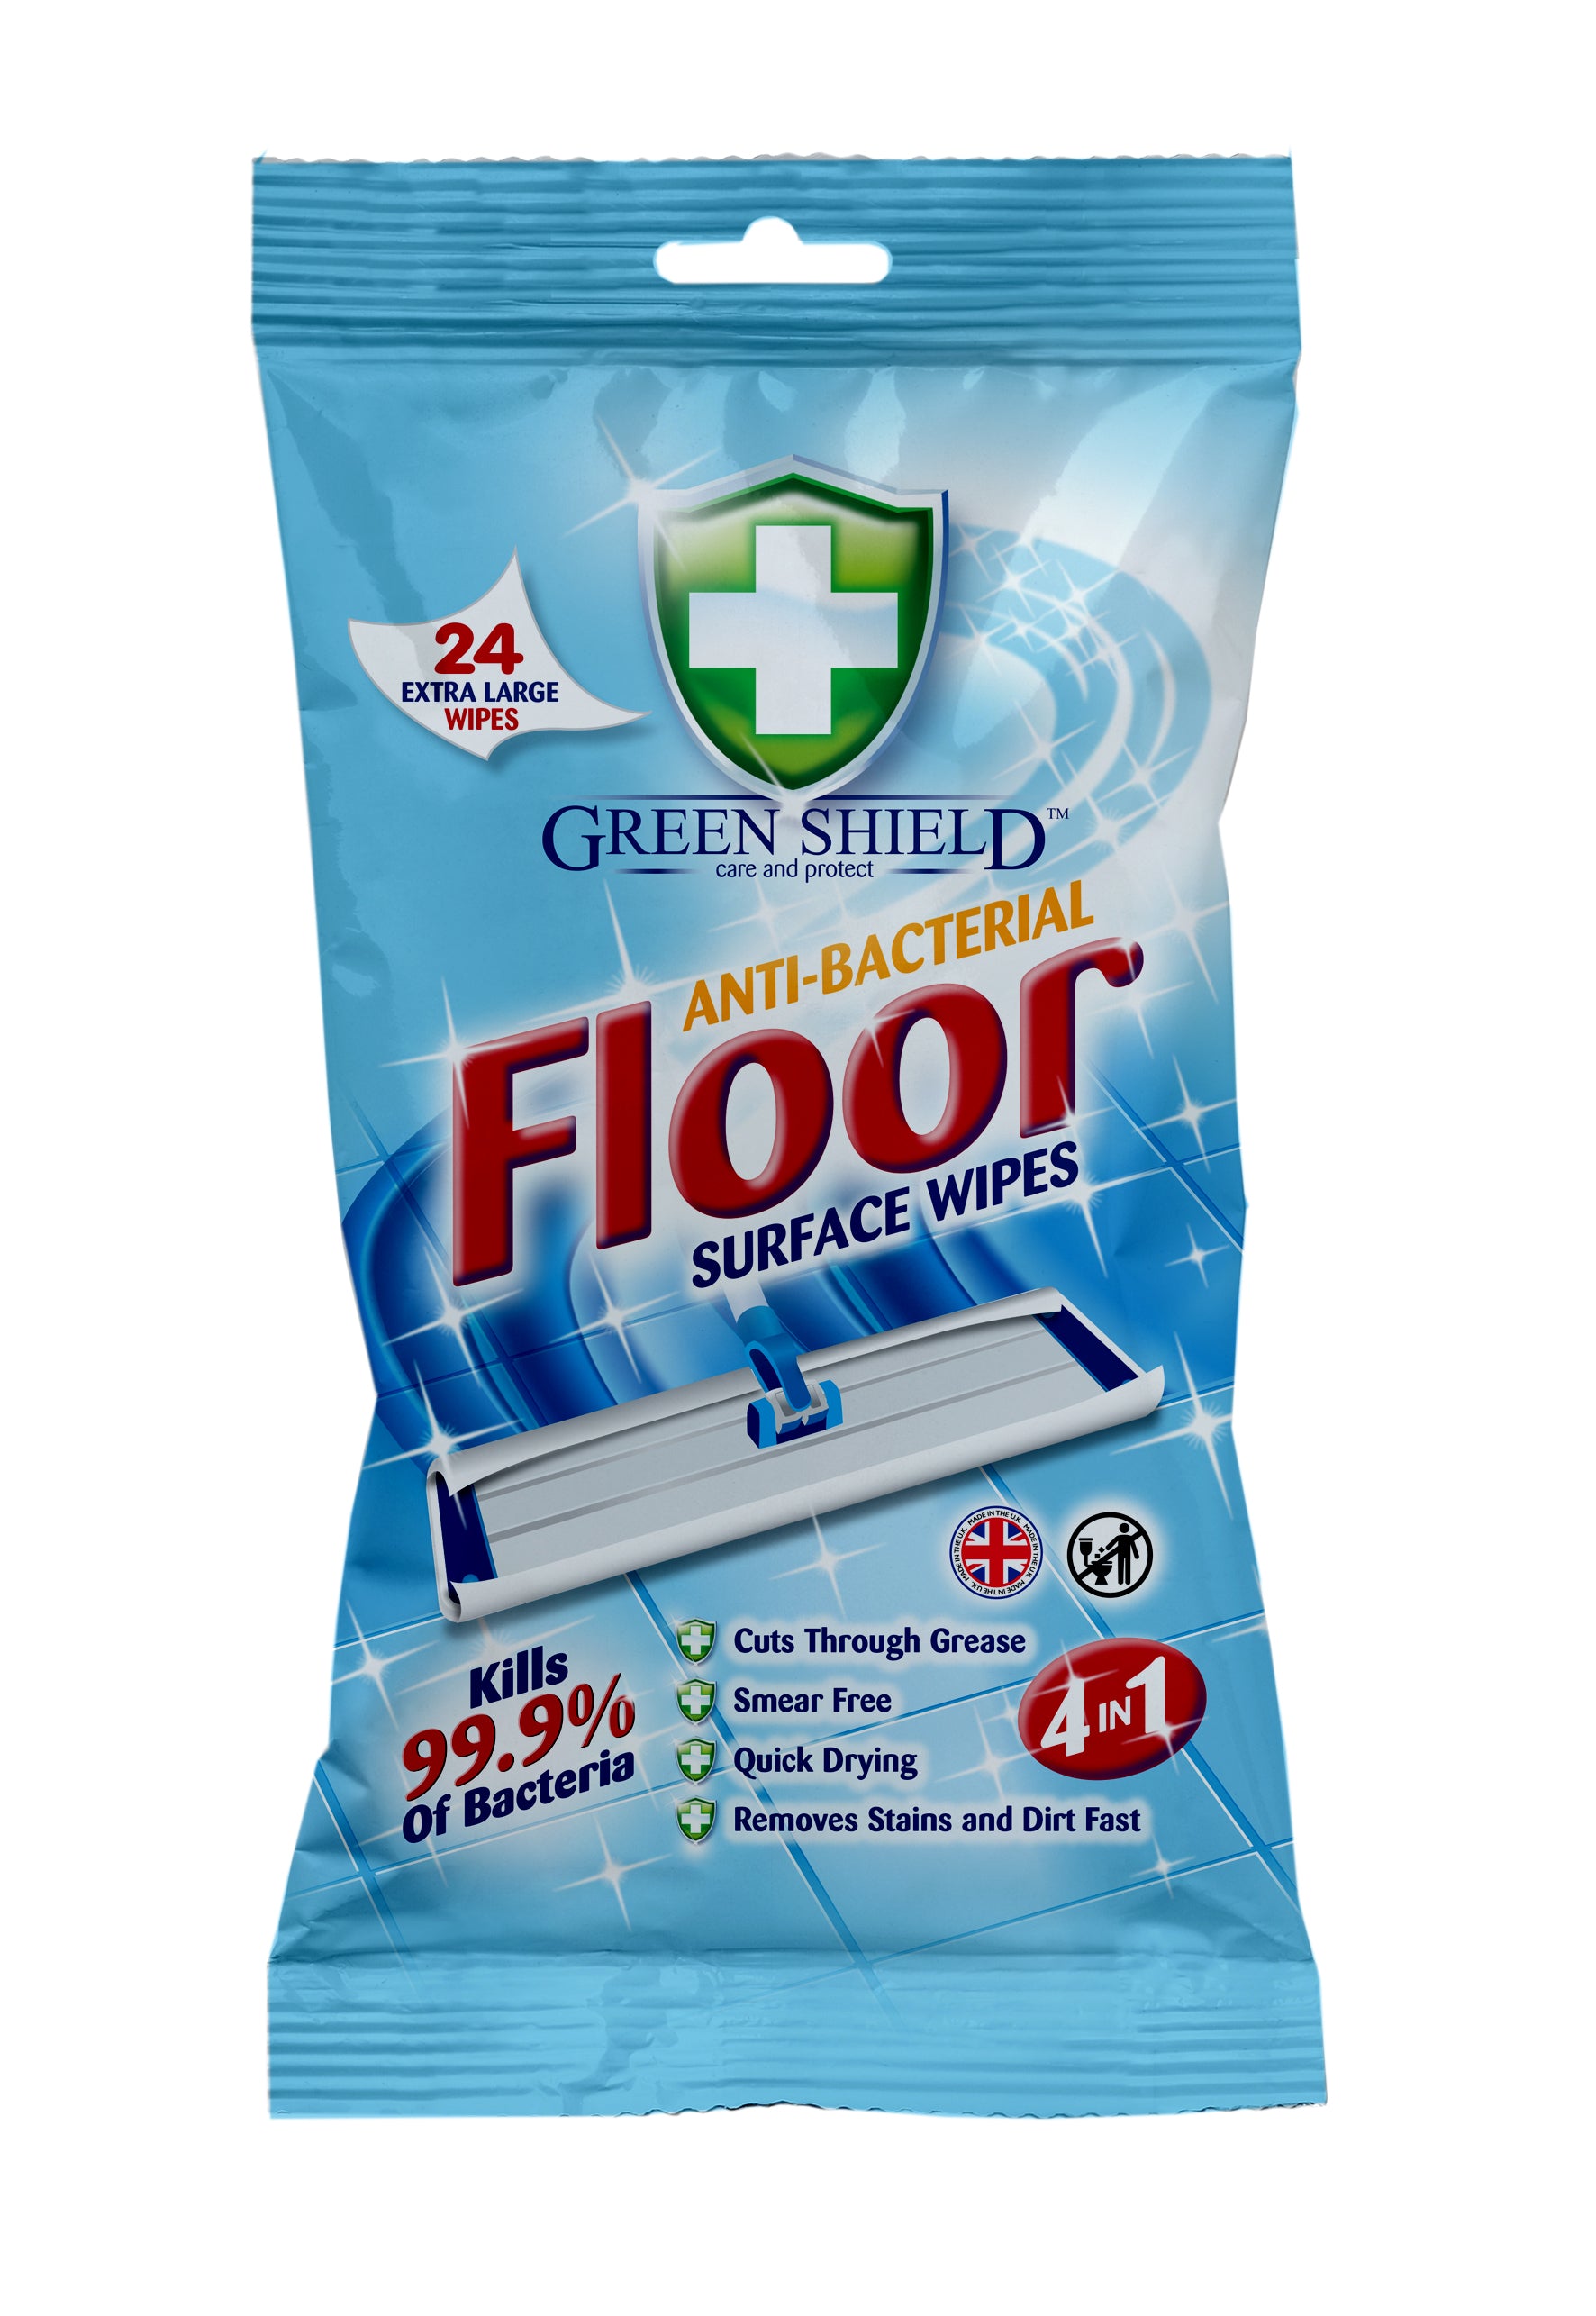 Greenshield Anti-Bac Floor Wipes - Pack of 24